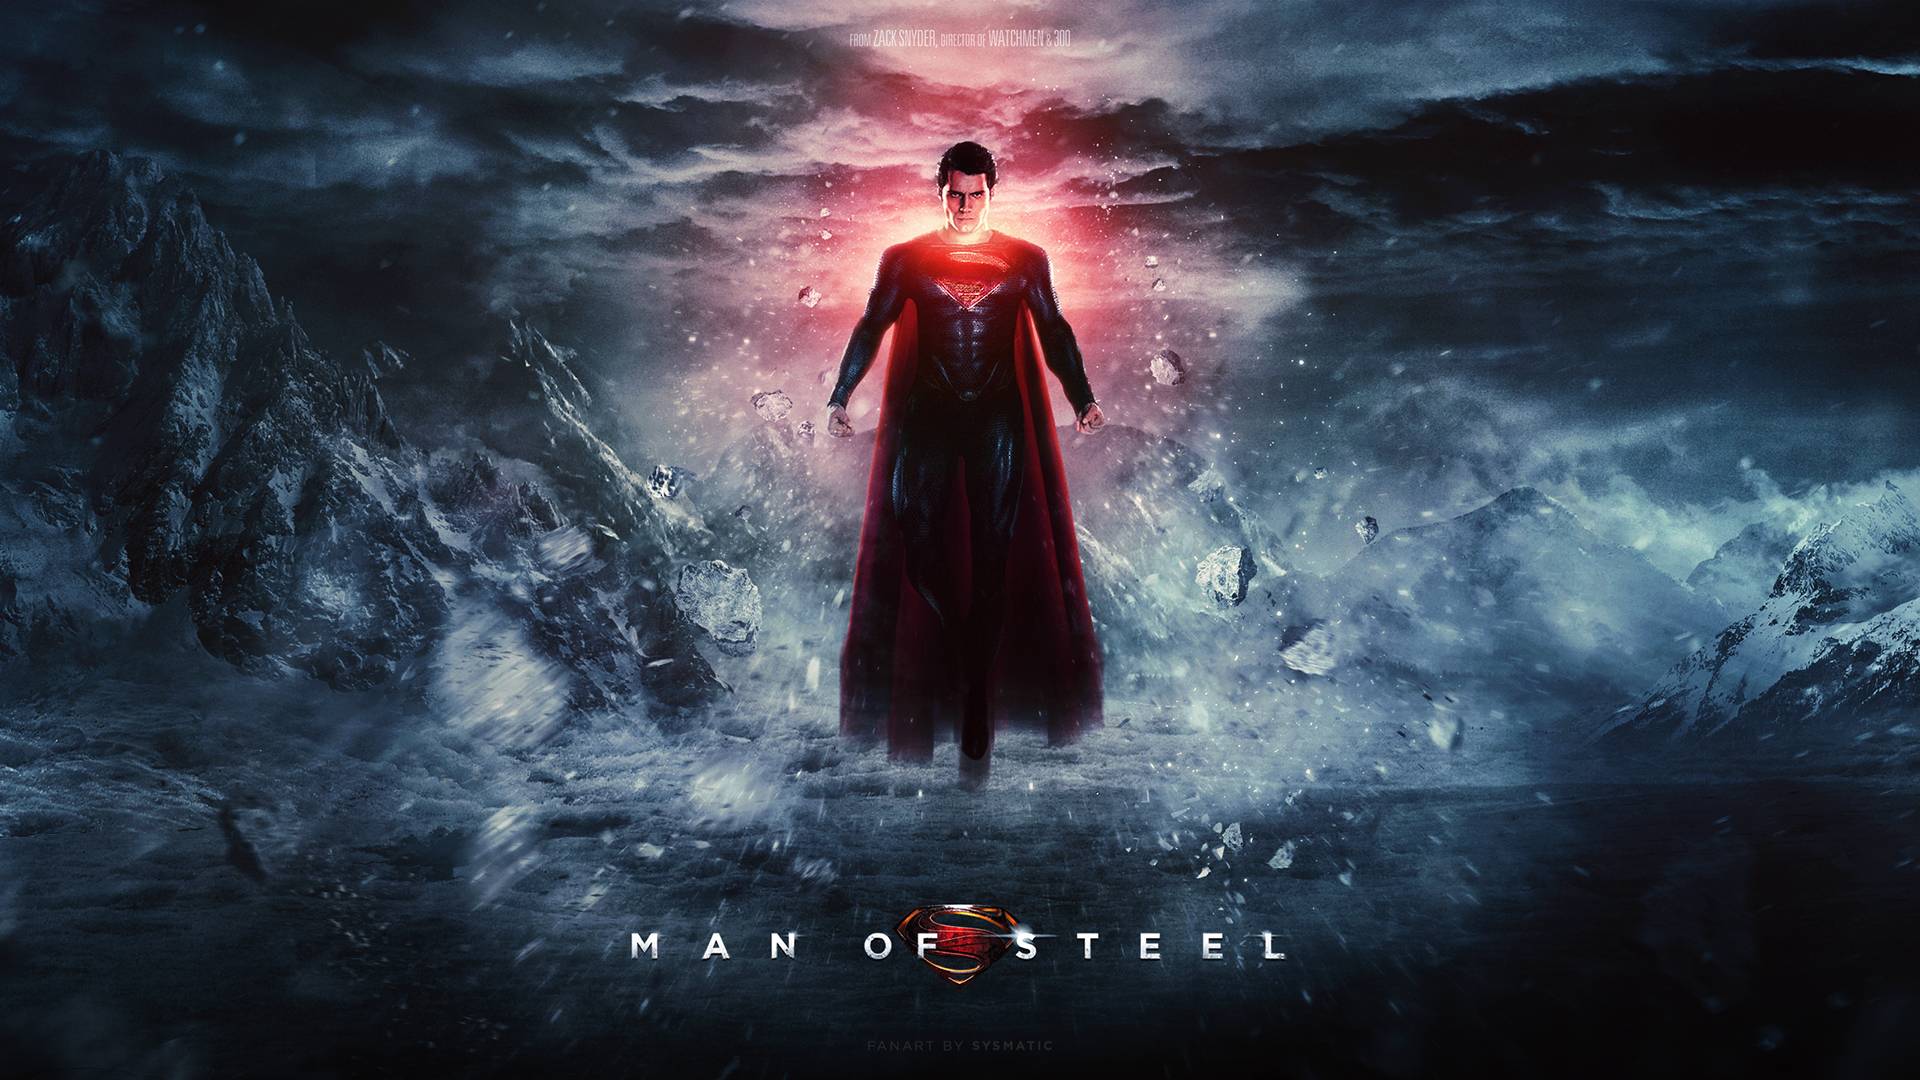 Man of Steel Background. Batman Wallpaper, Superman Wallpaper and Snowman Wallpaper